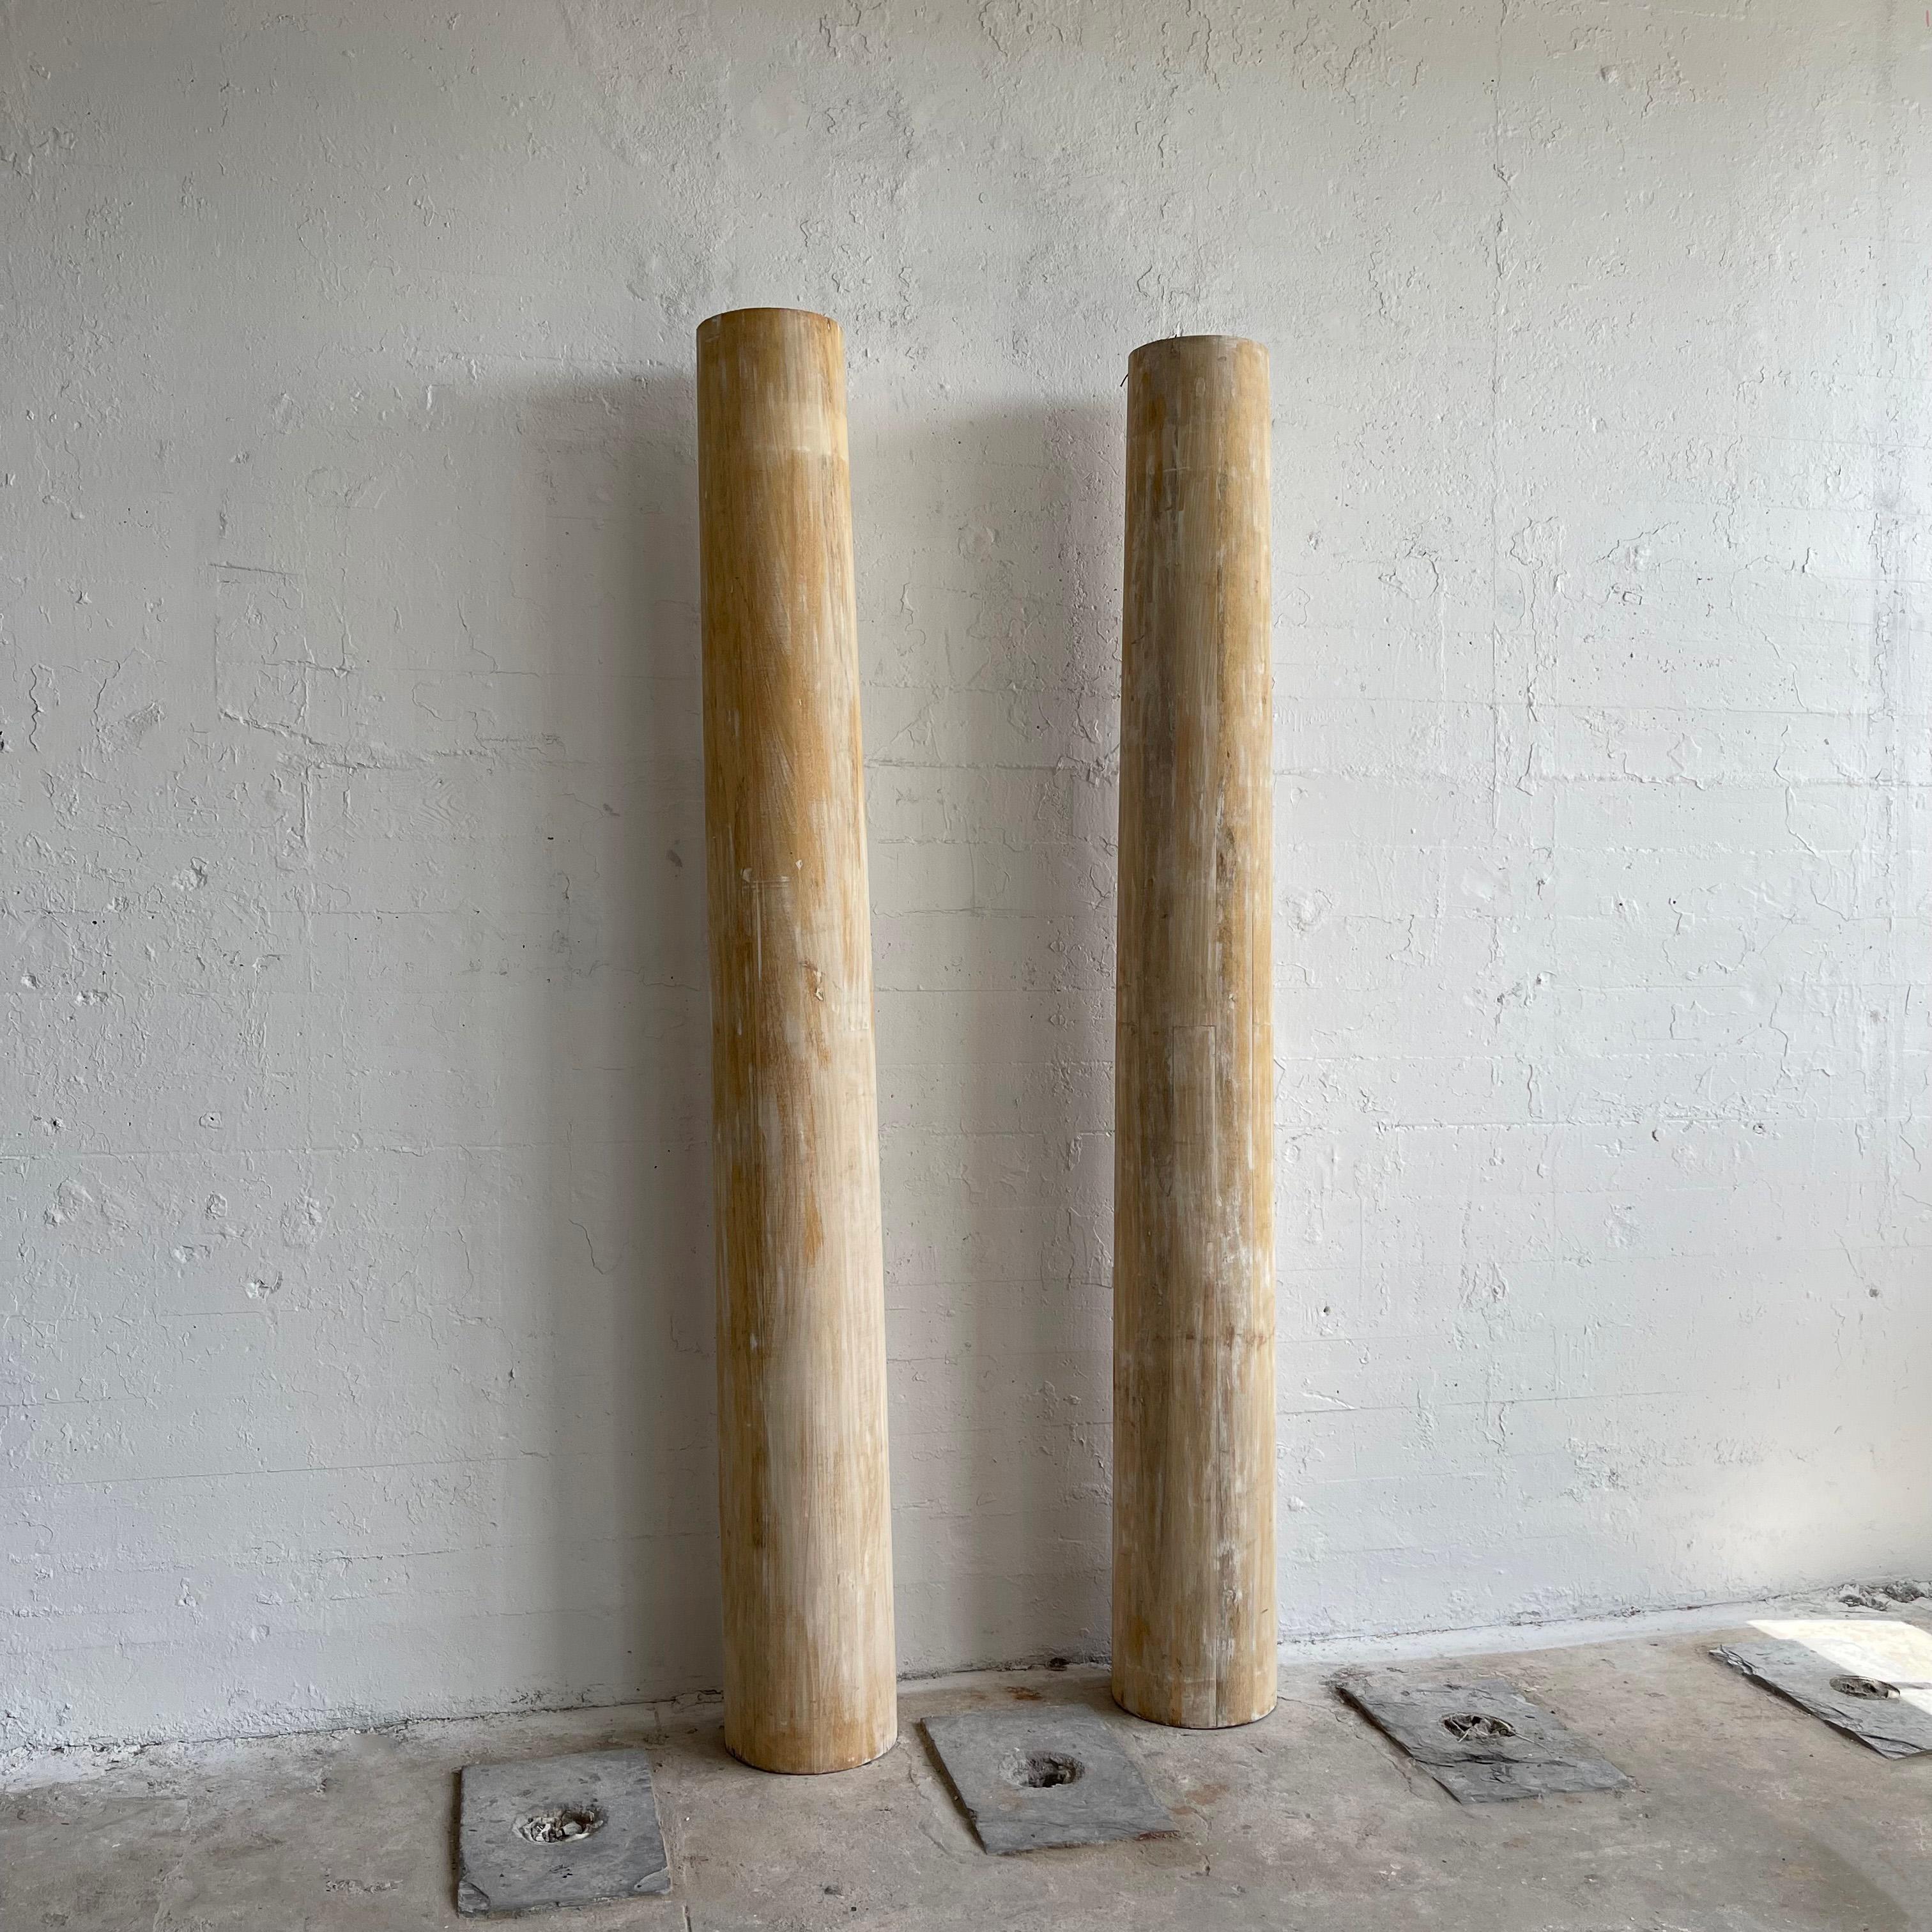 hollow wood columns